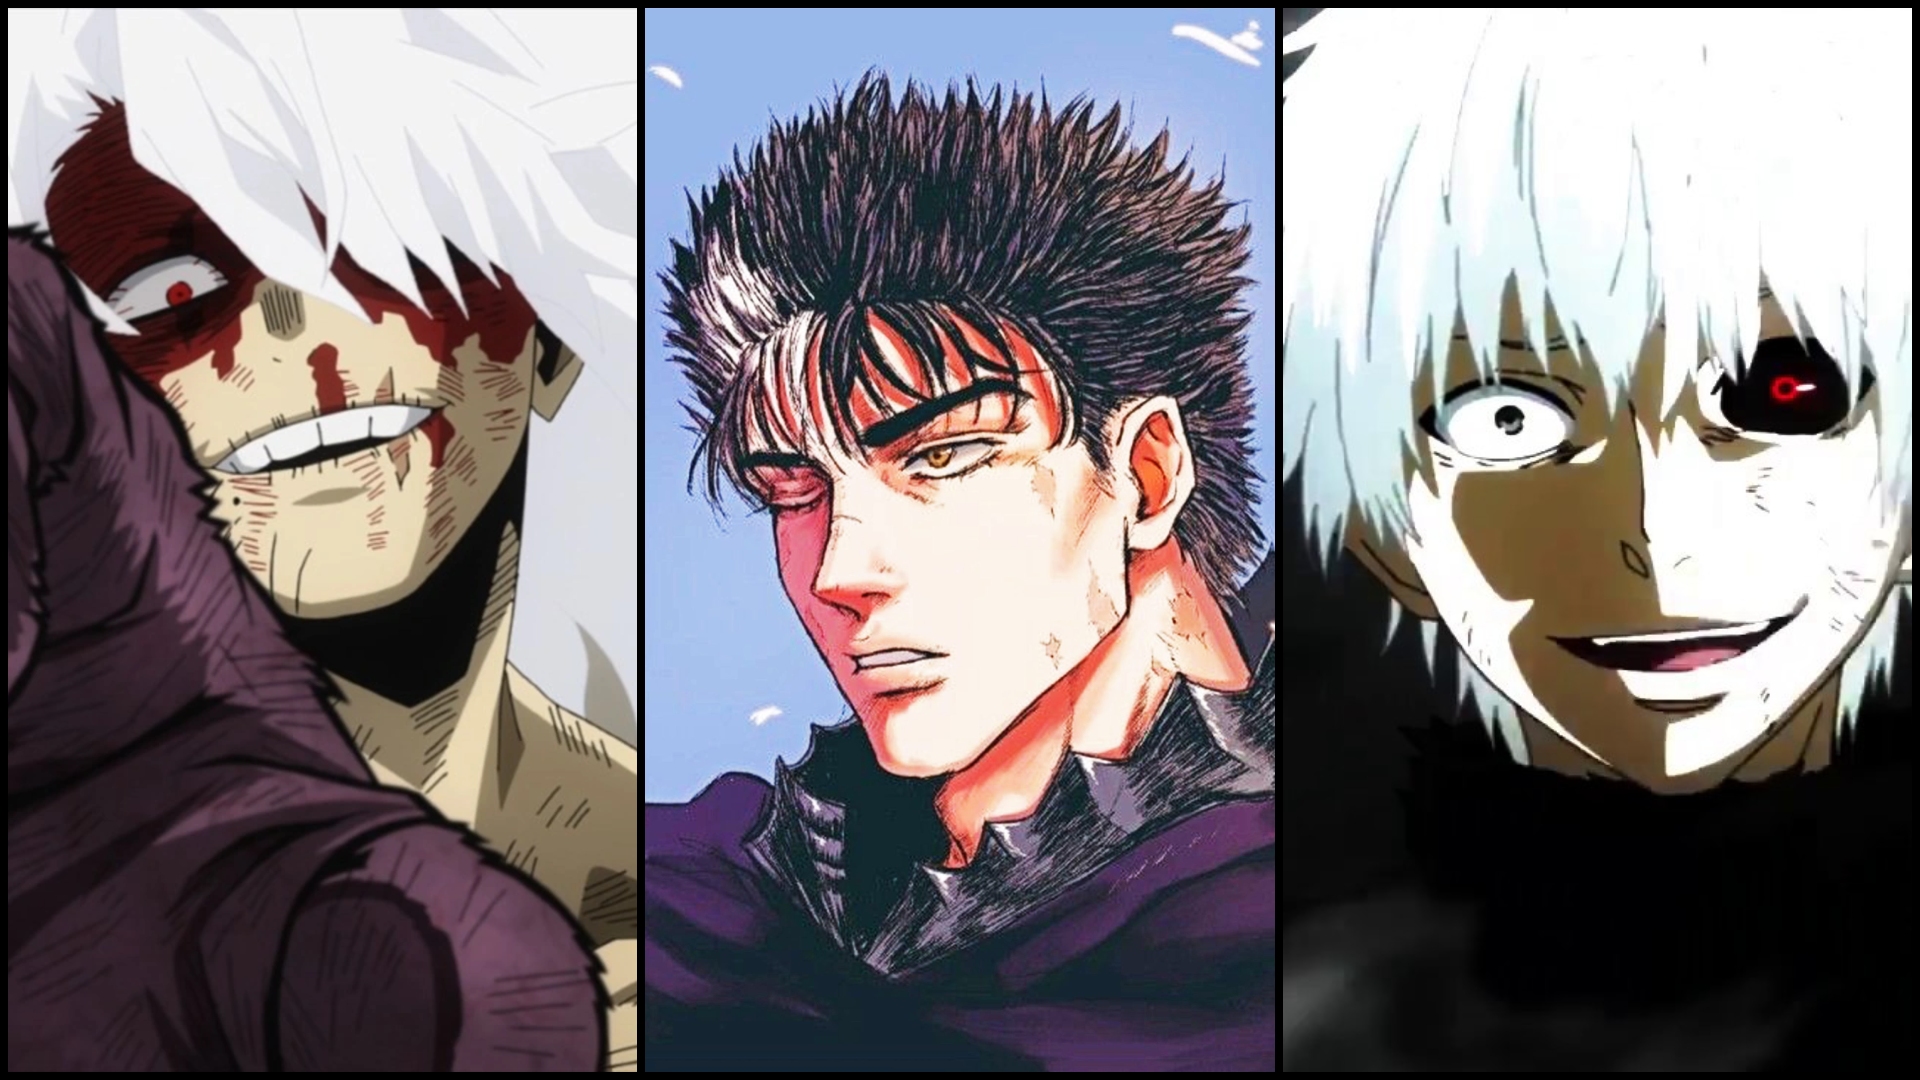 Anime Characters White Hair is a symptom of Mental Breakdown